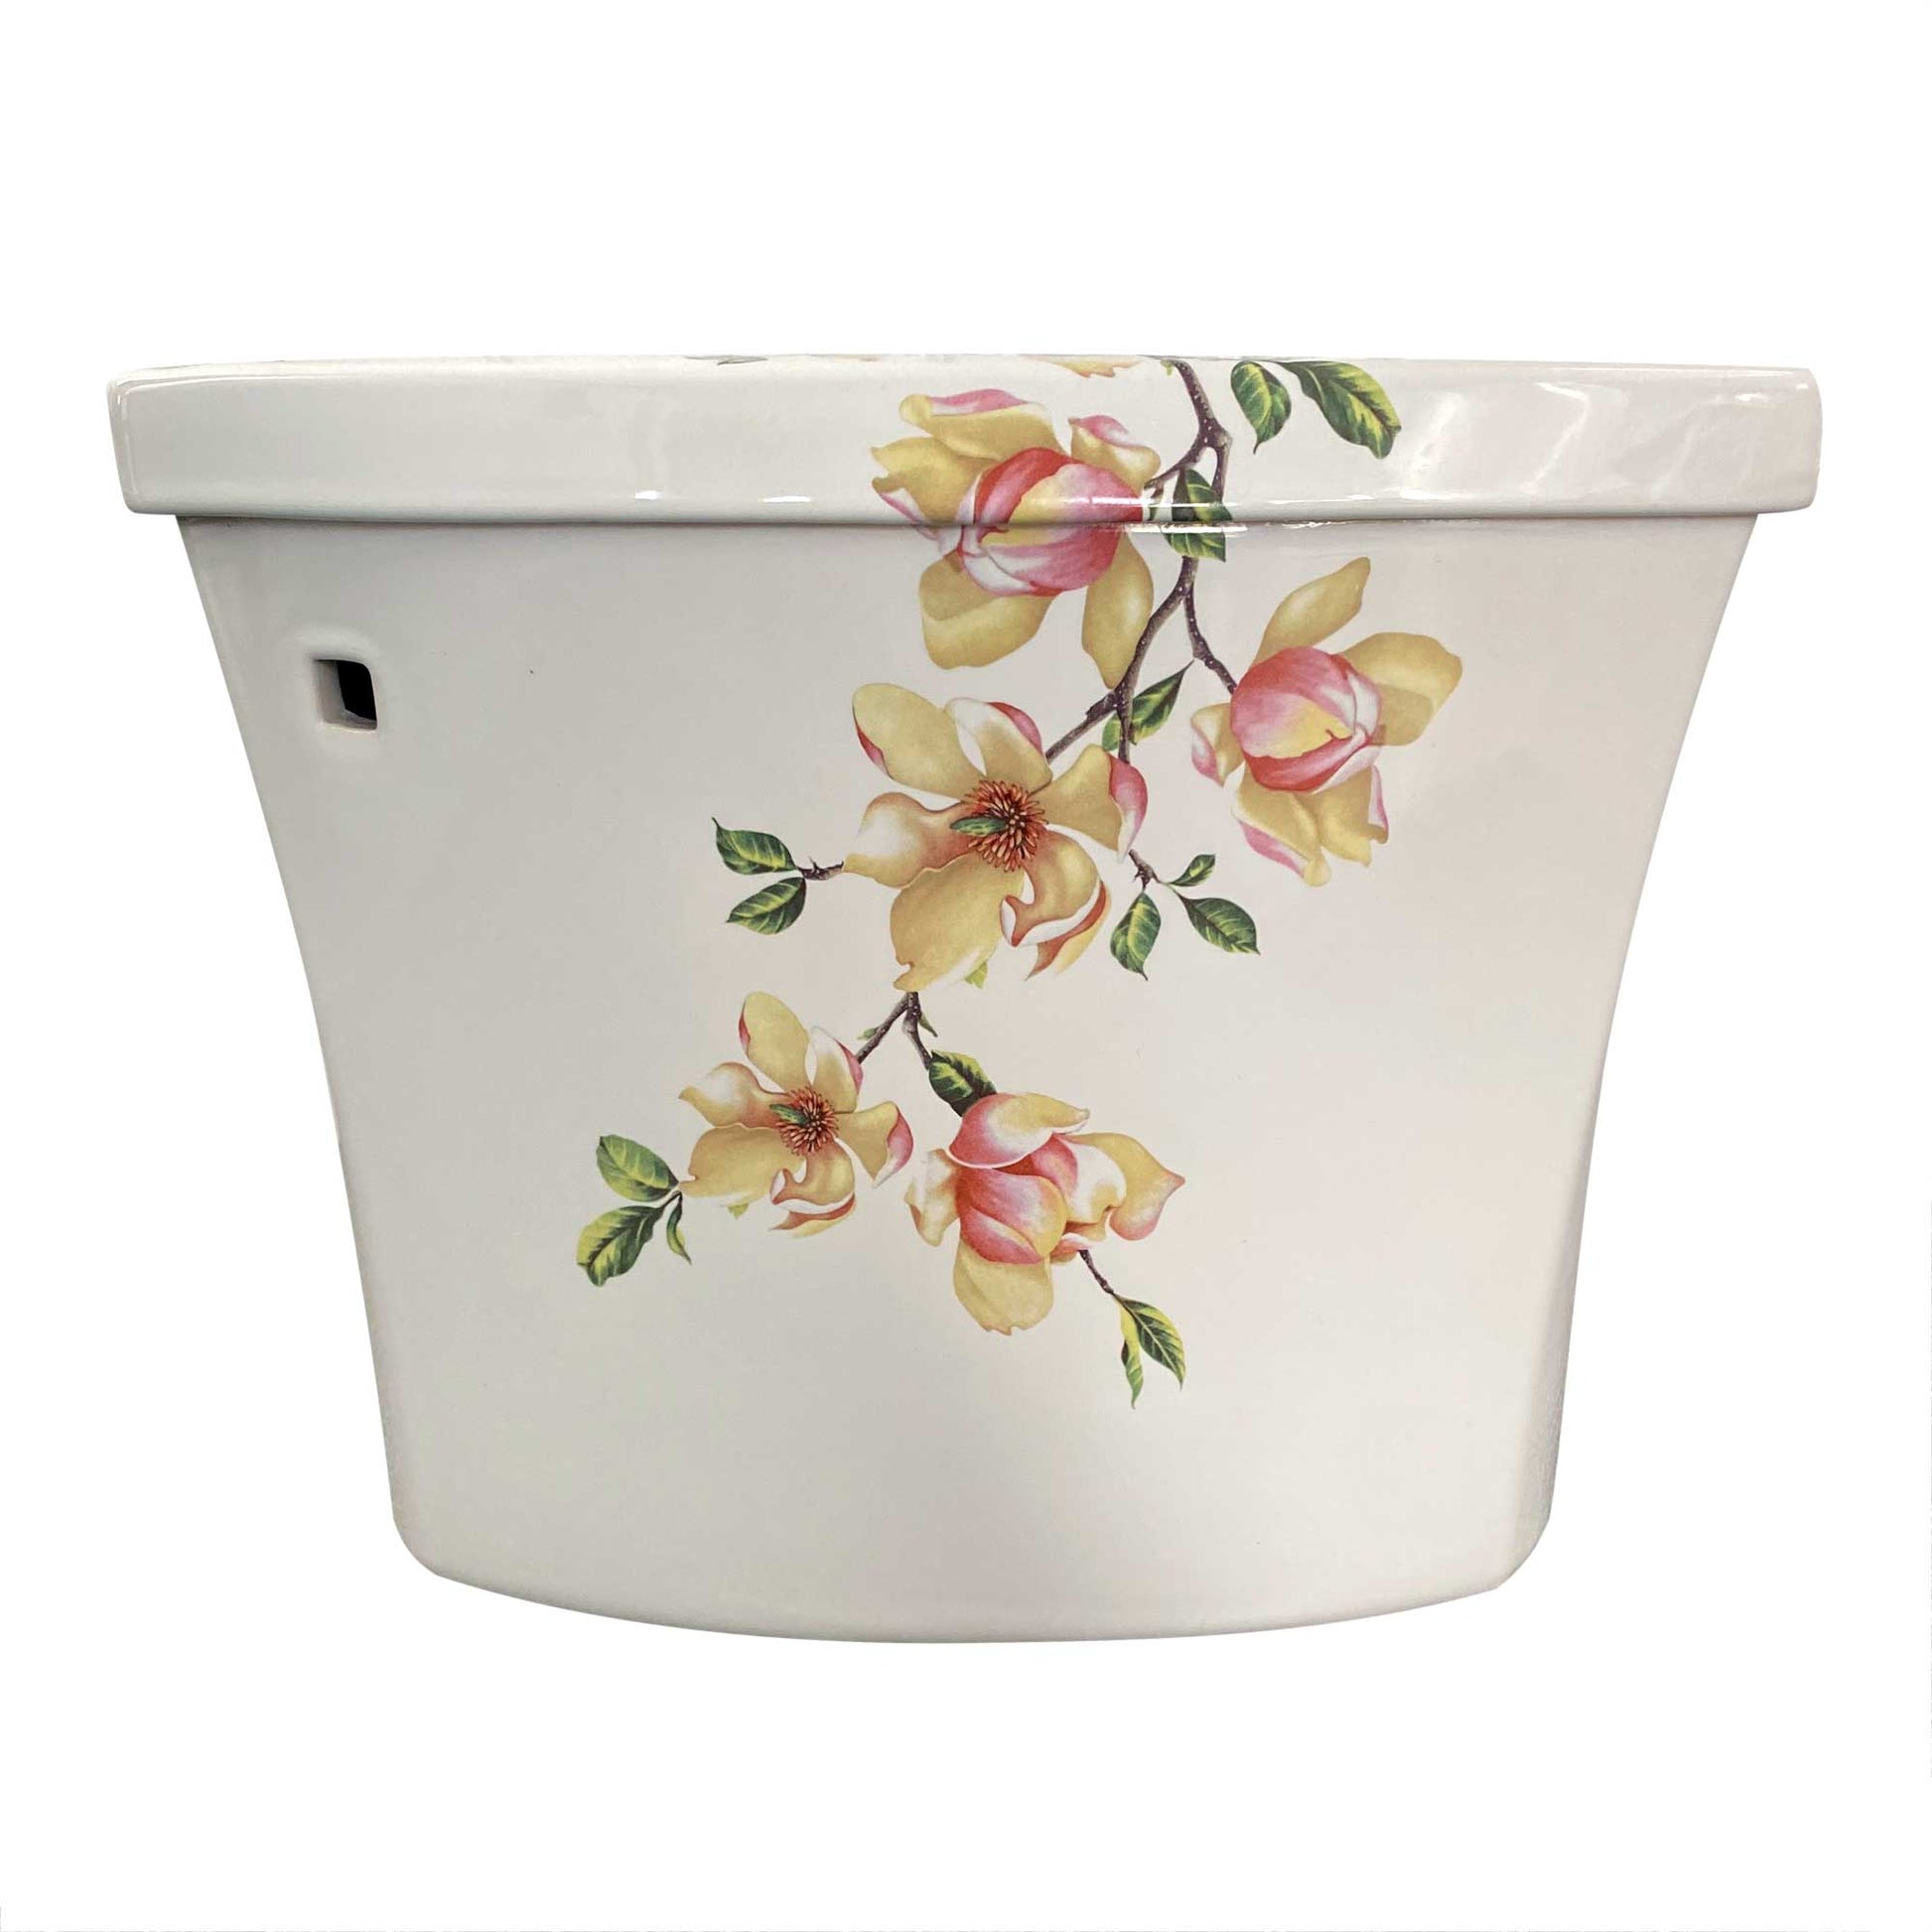 Contemporary Kohler toilet custom painted with Magnolia flowers